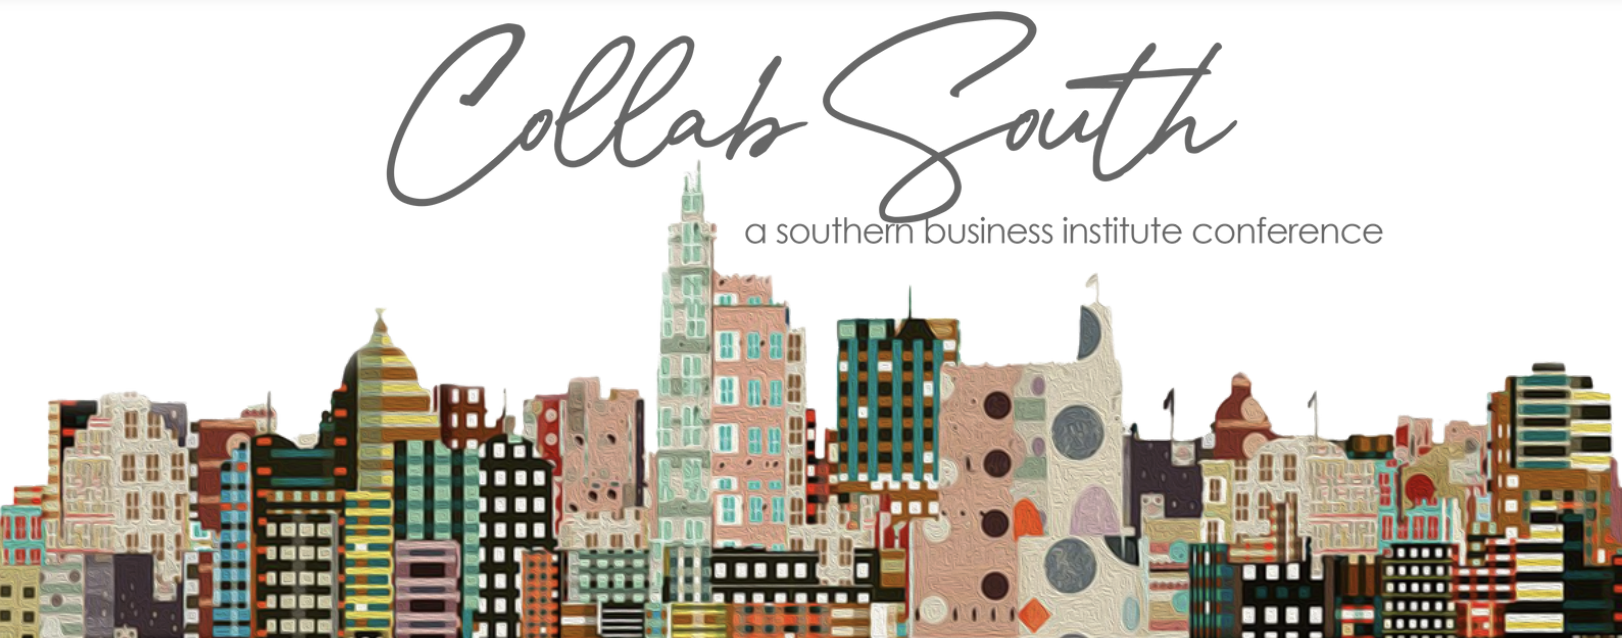 Collab South logo over a cartoon city skyline